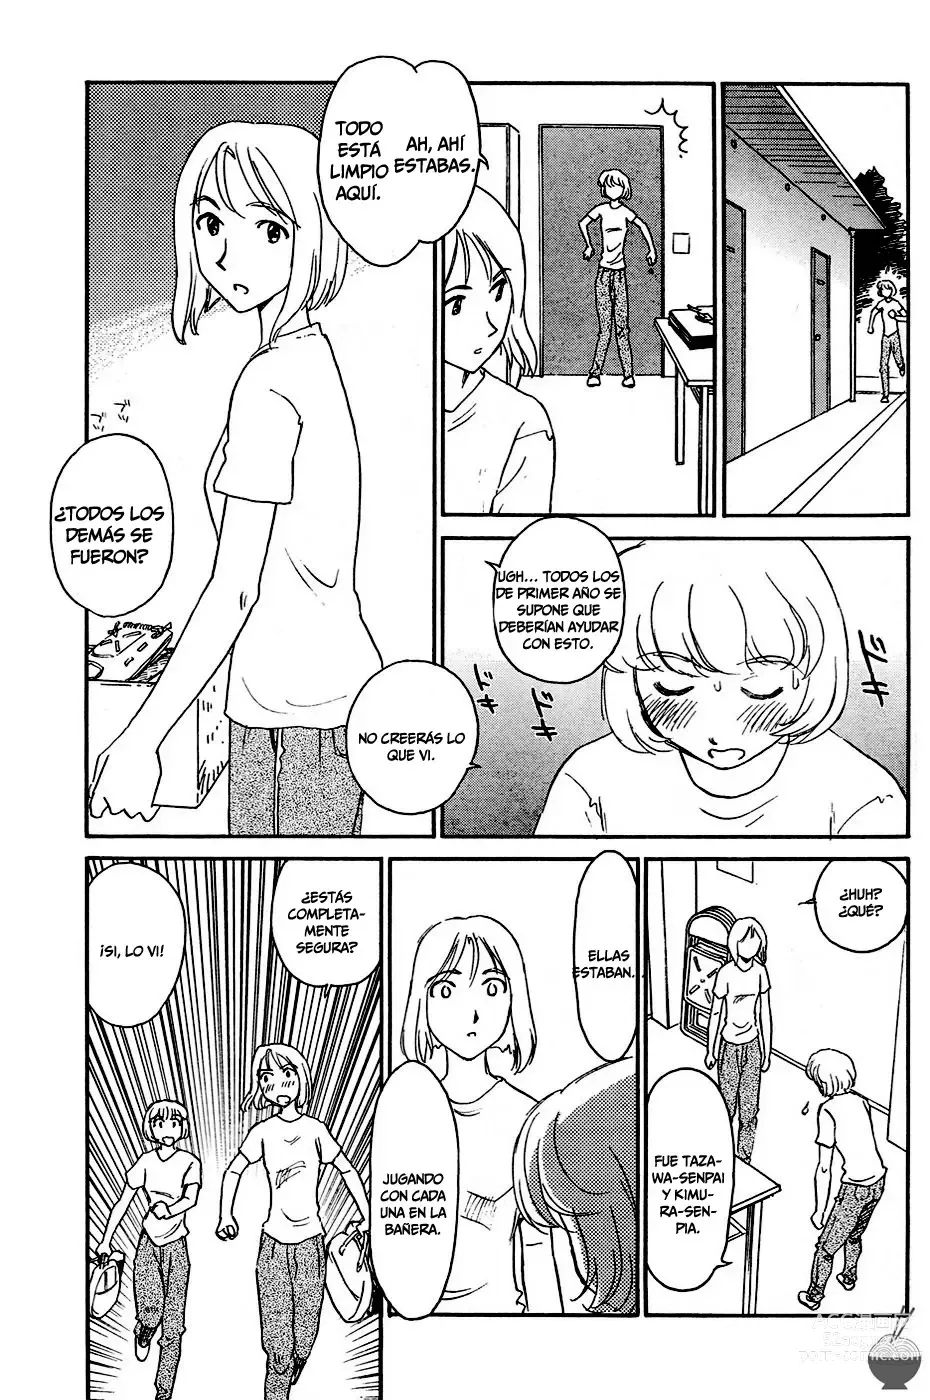 Page 221 of manga Hana no Iro - Colors of Flowers